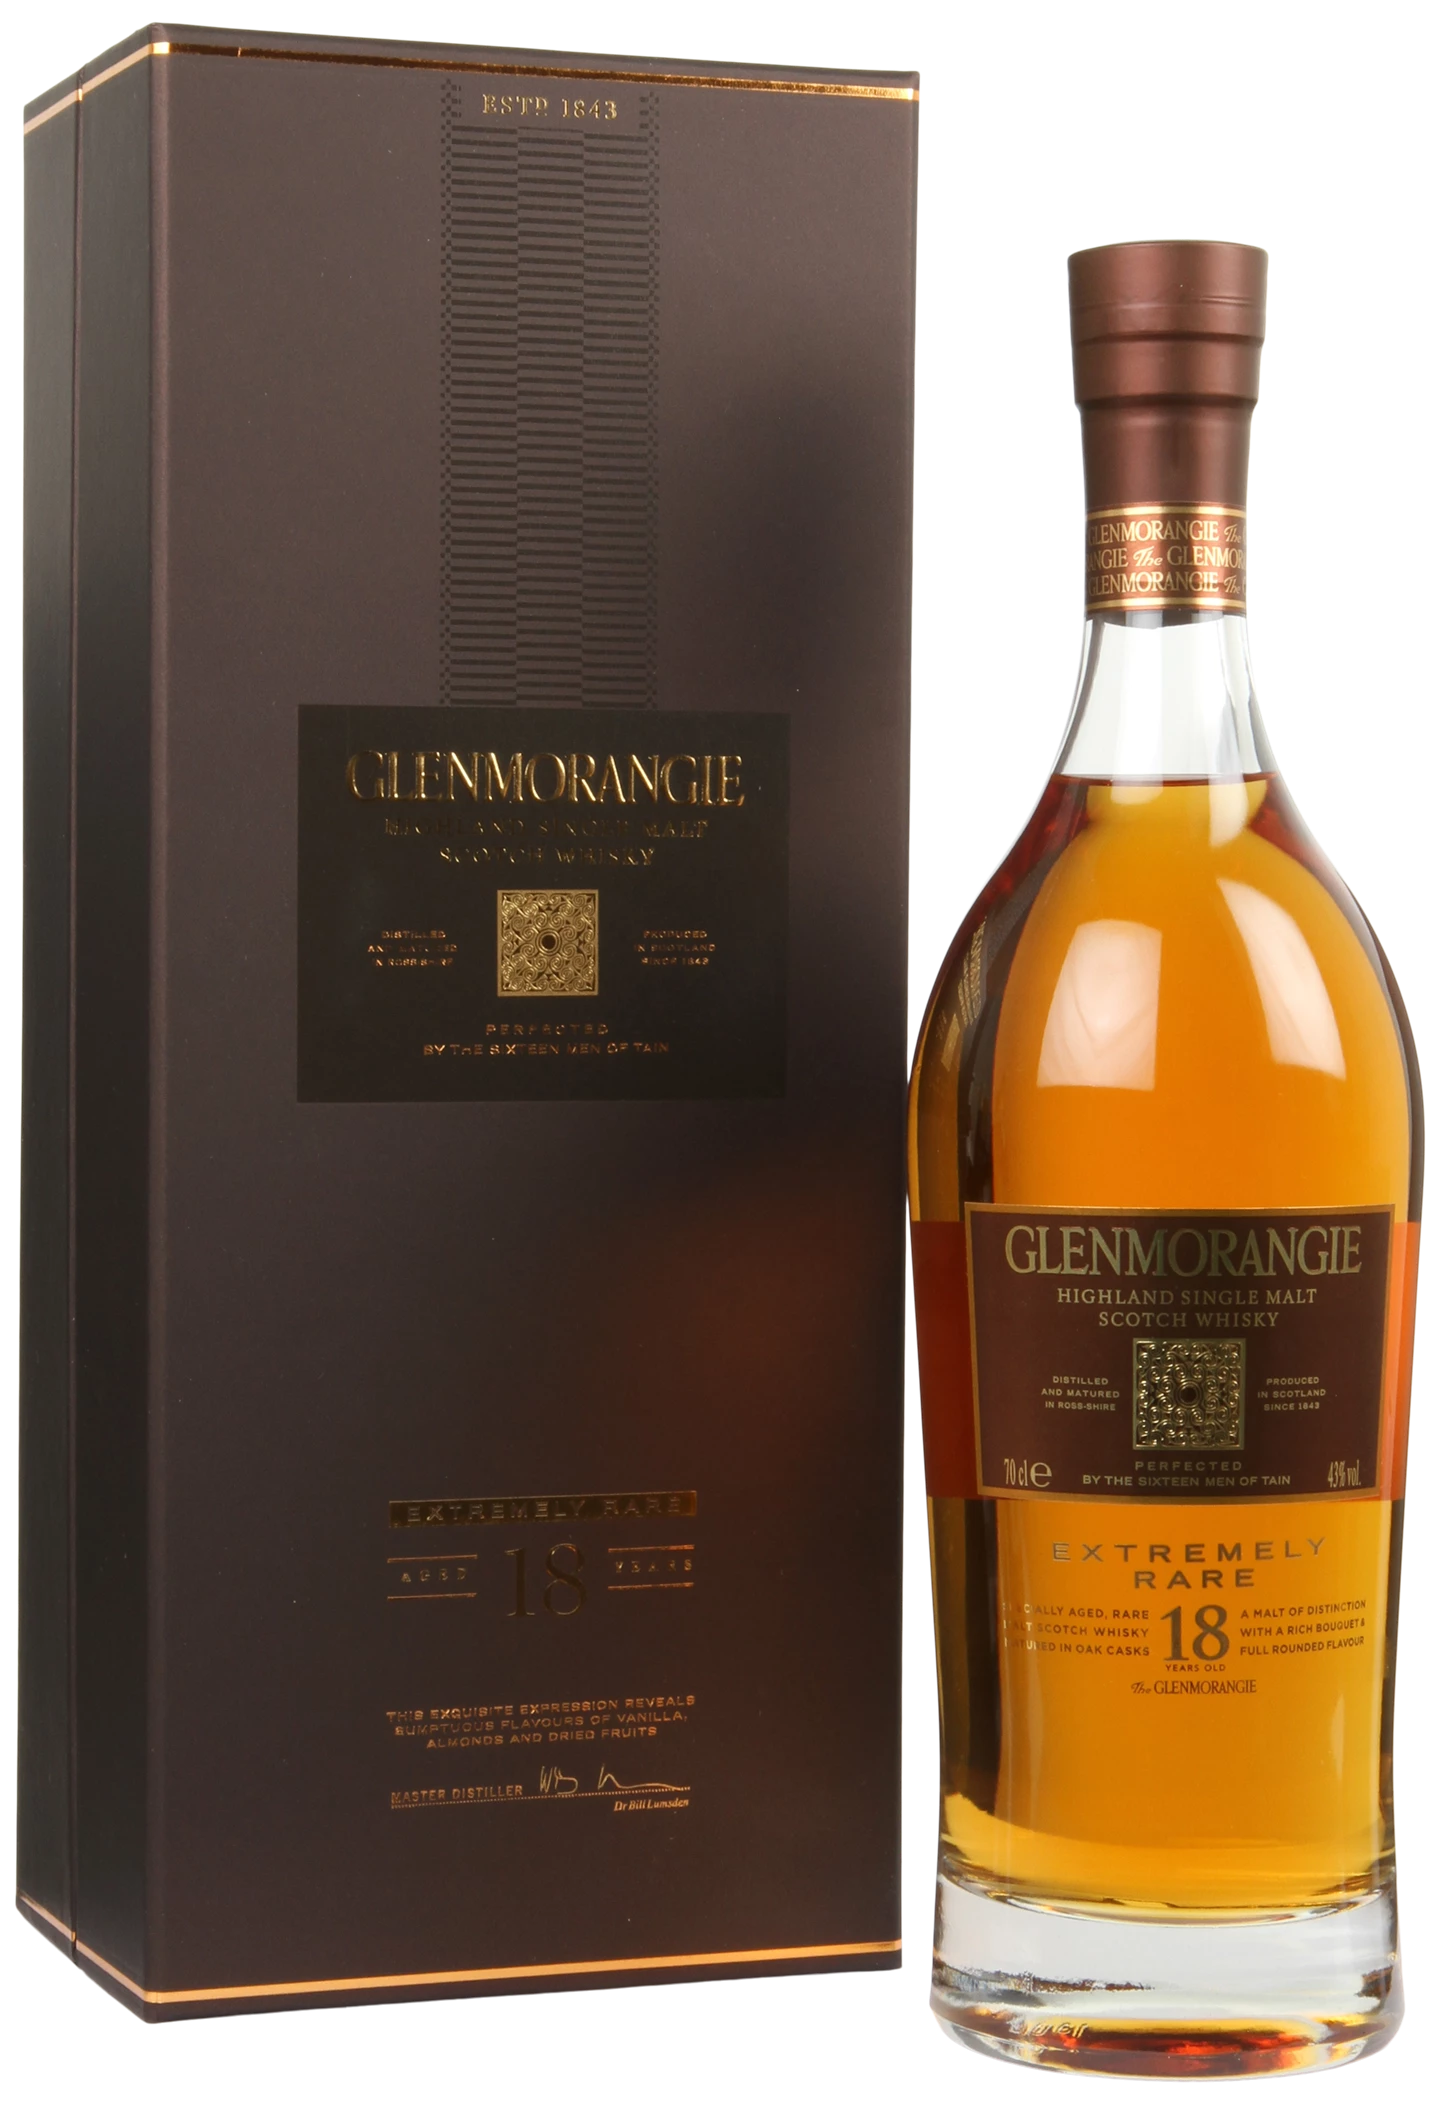 Løgismose Spiritus Glenmorangie Highland Skotland 43% Glenmorangie Whisky 18 Years Old Æske - 221143 1